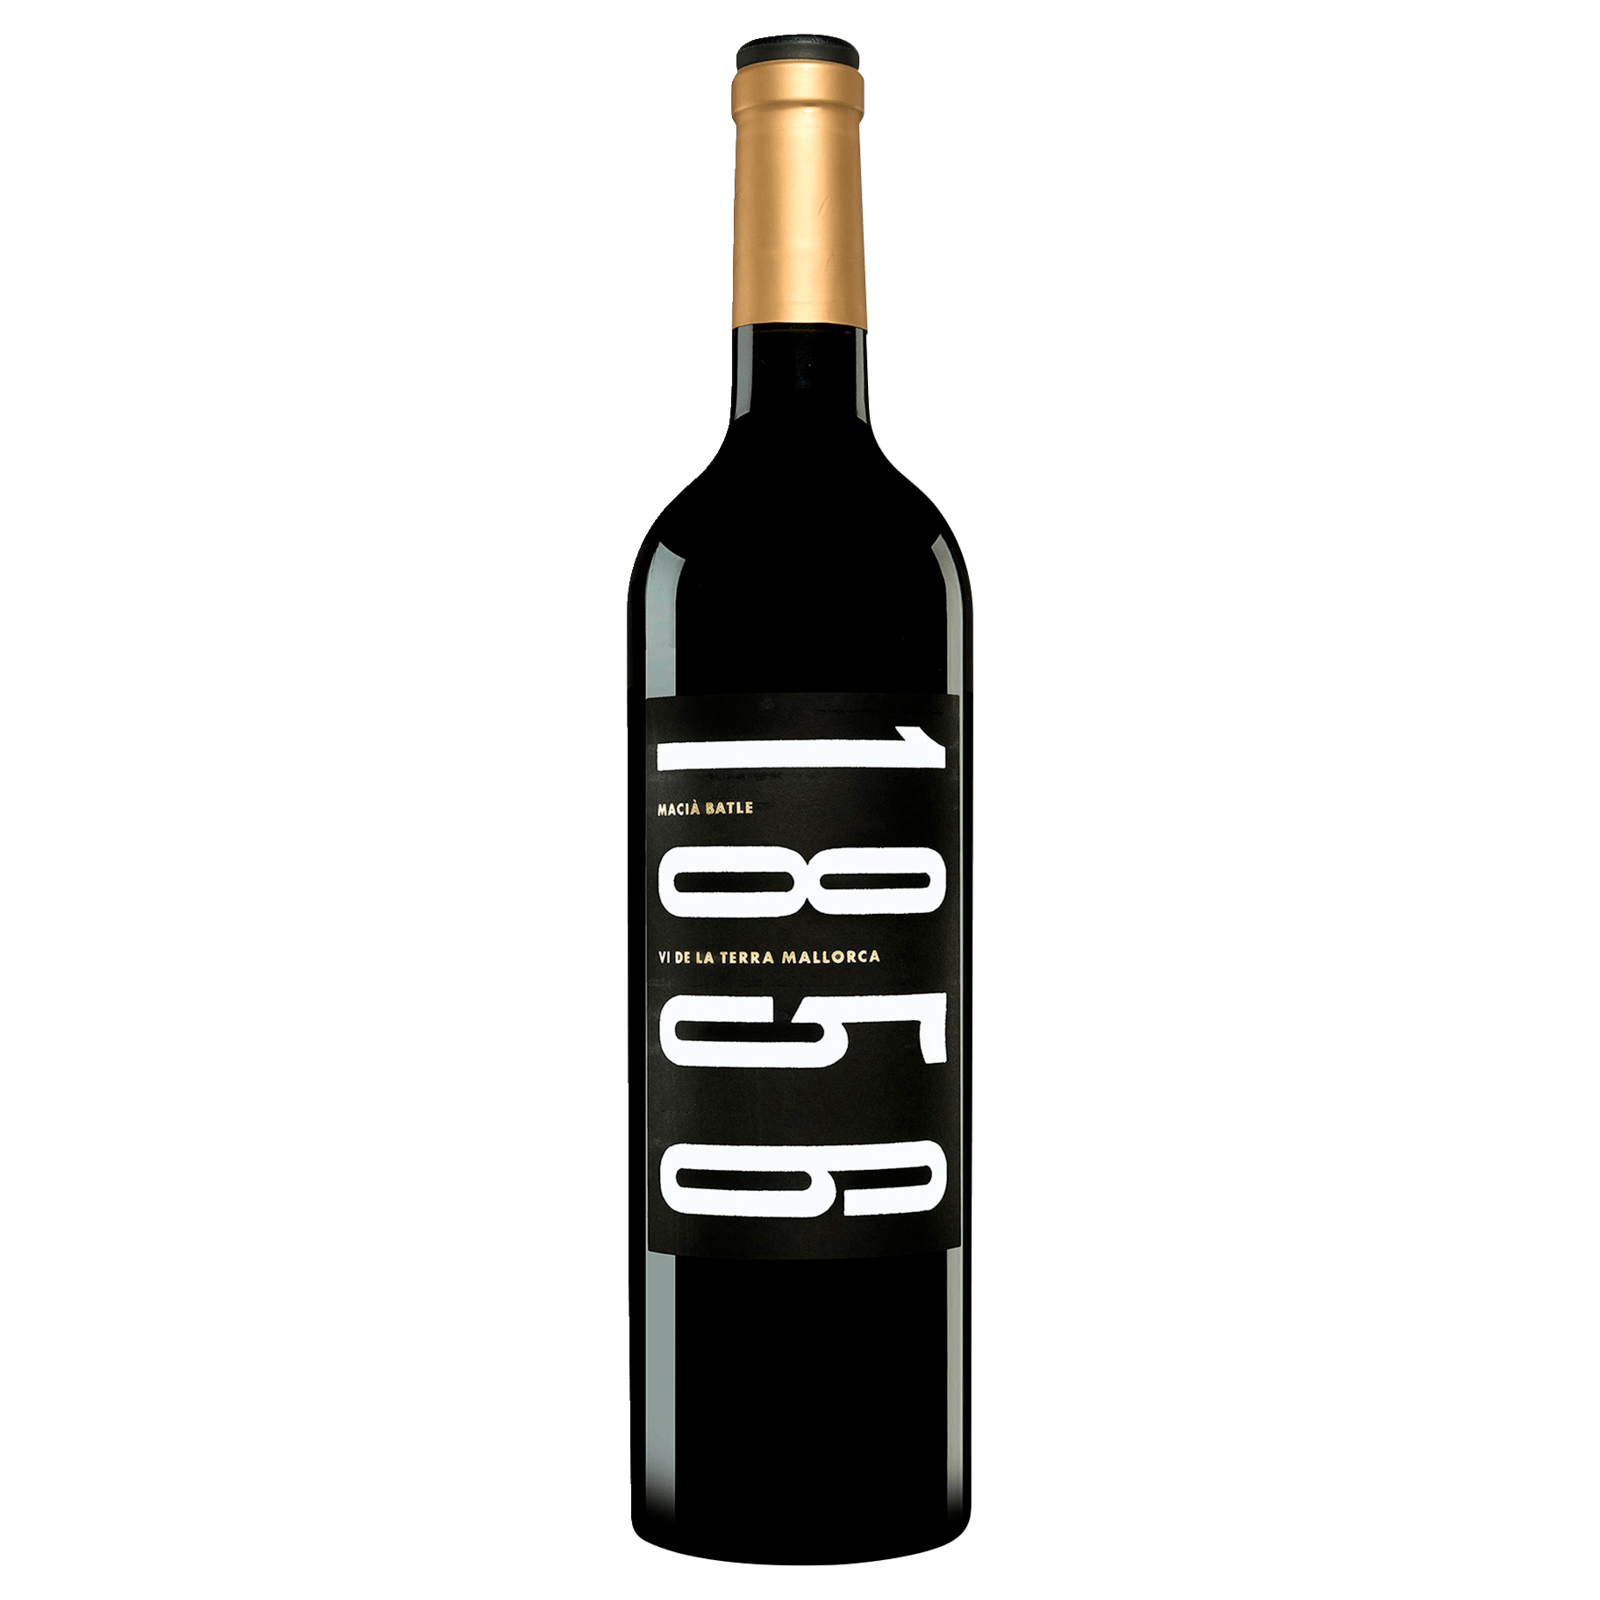 Macià Batle Santa Clara Blanc de Blancs Mallorca Vino … für 8,95€ von Lidl